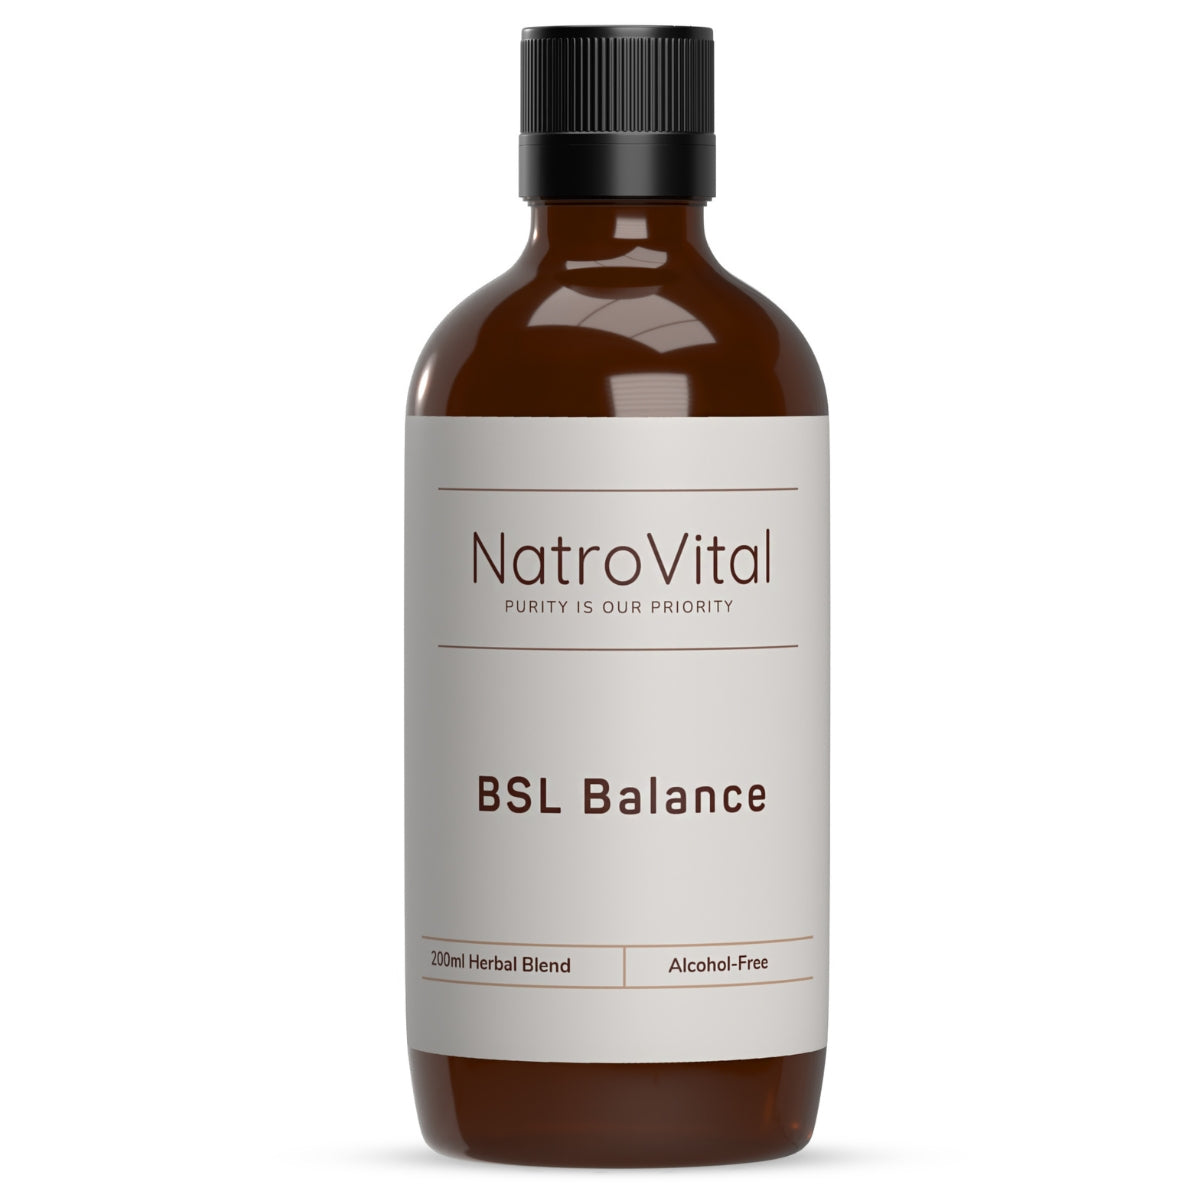 NatroVital BSL Balance